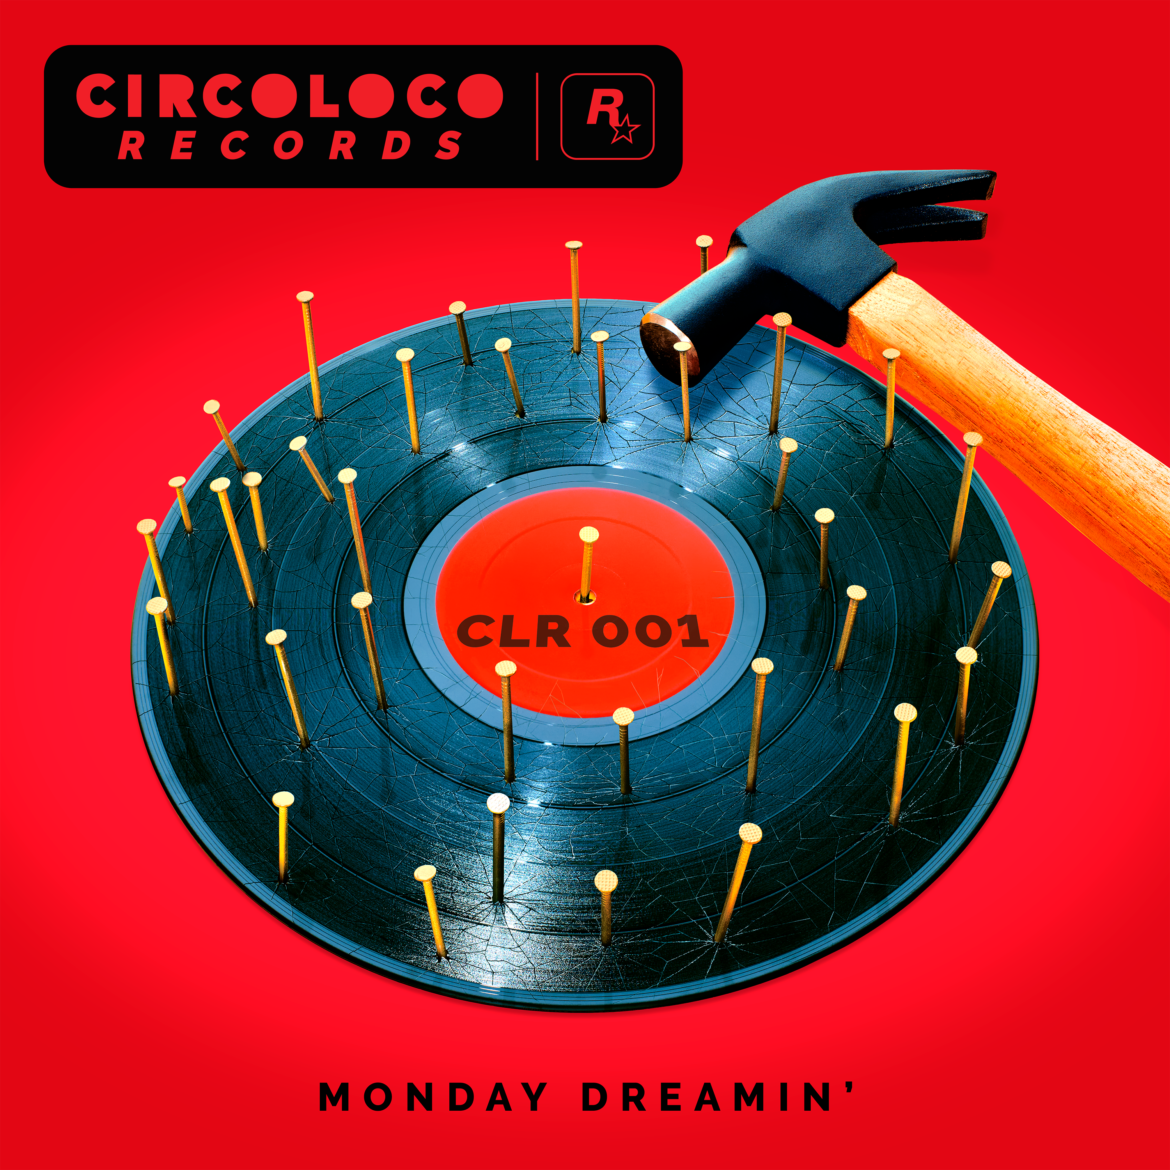 Introducing CircoLoco Records, A New Record Label from Rockstar Games and CircoLoco